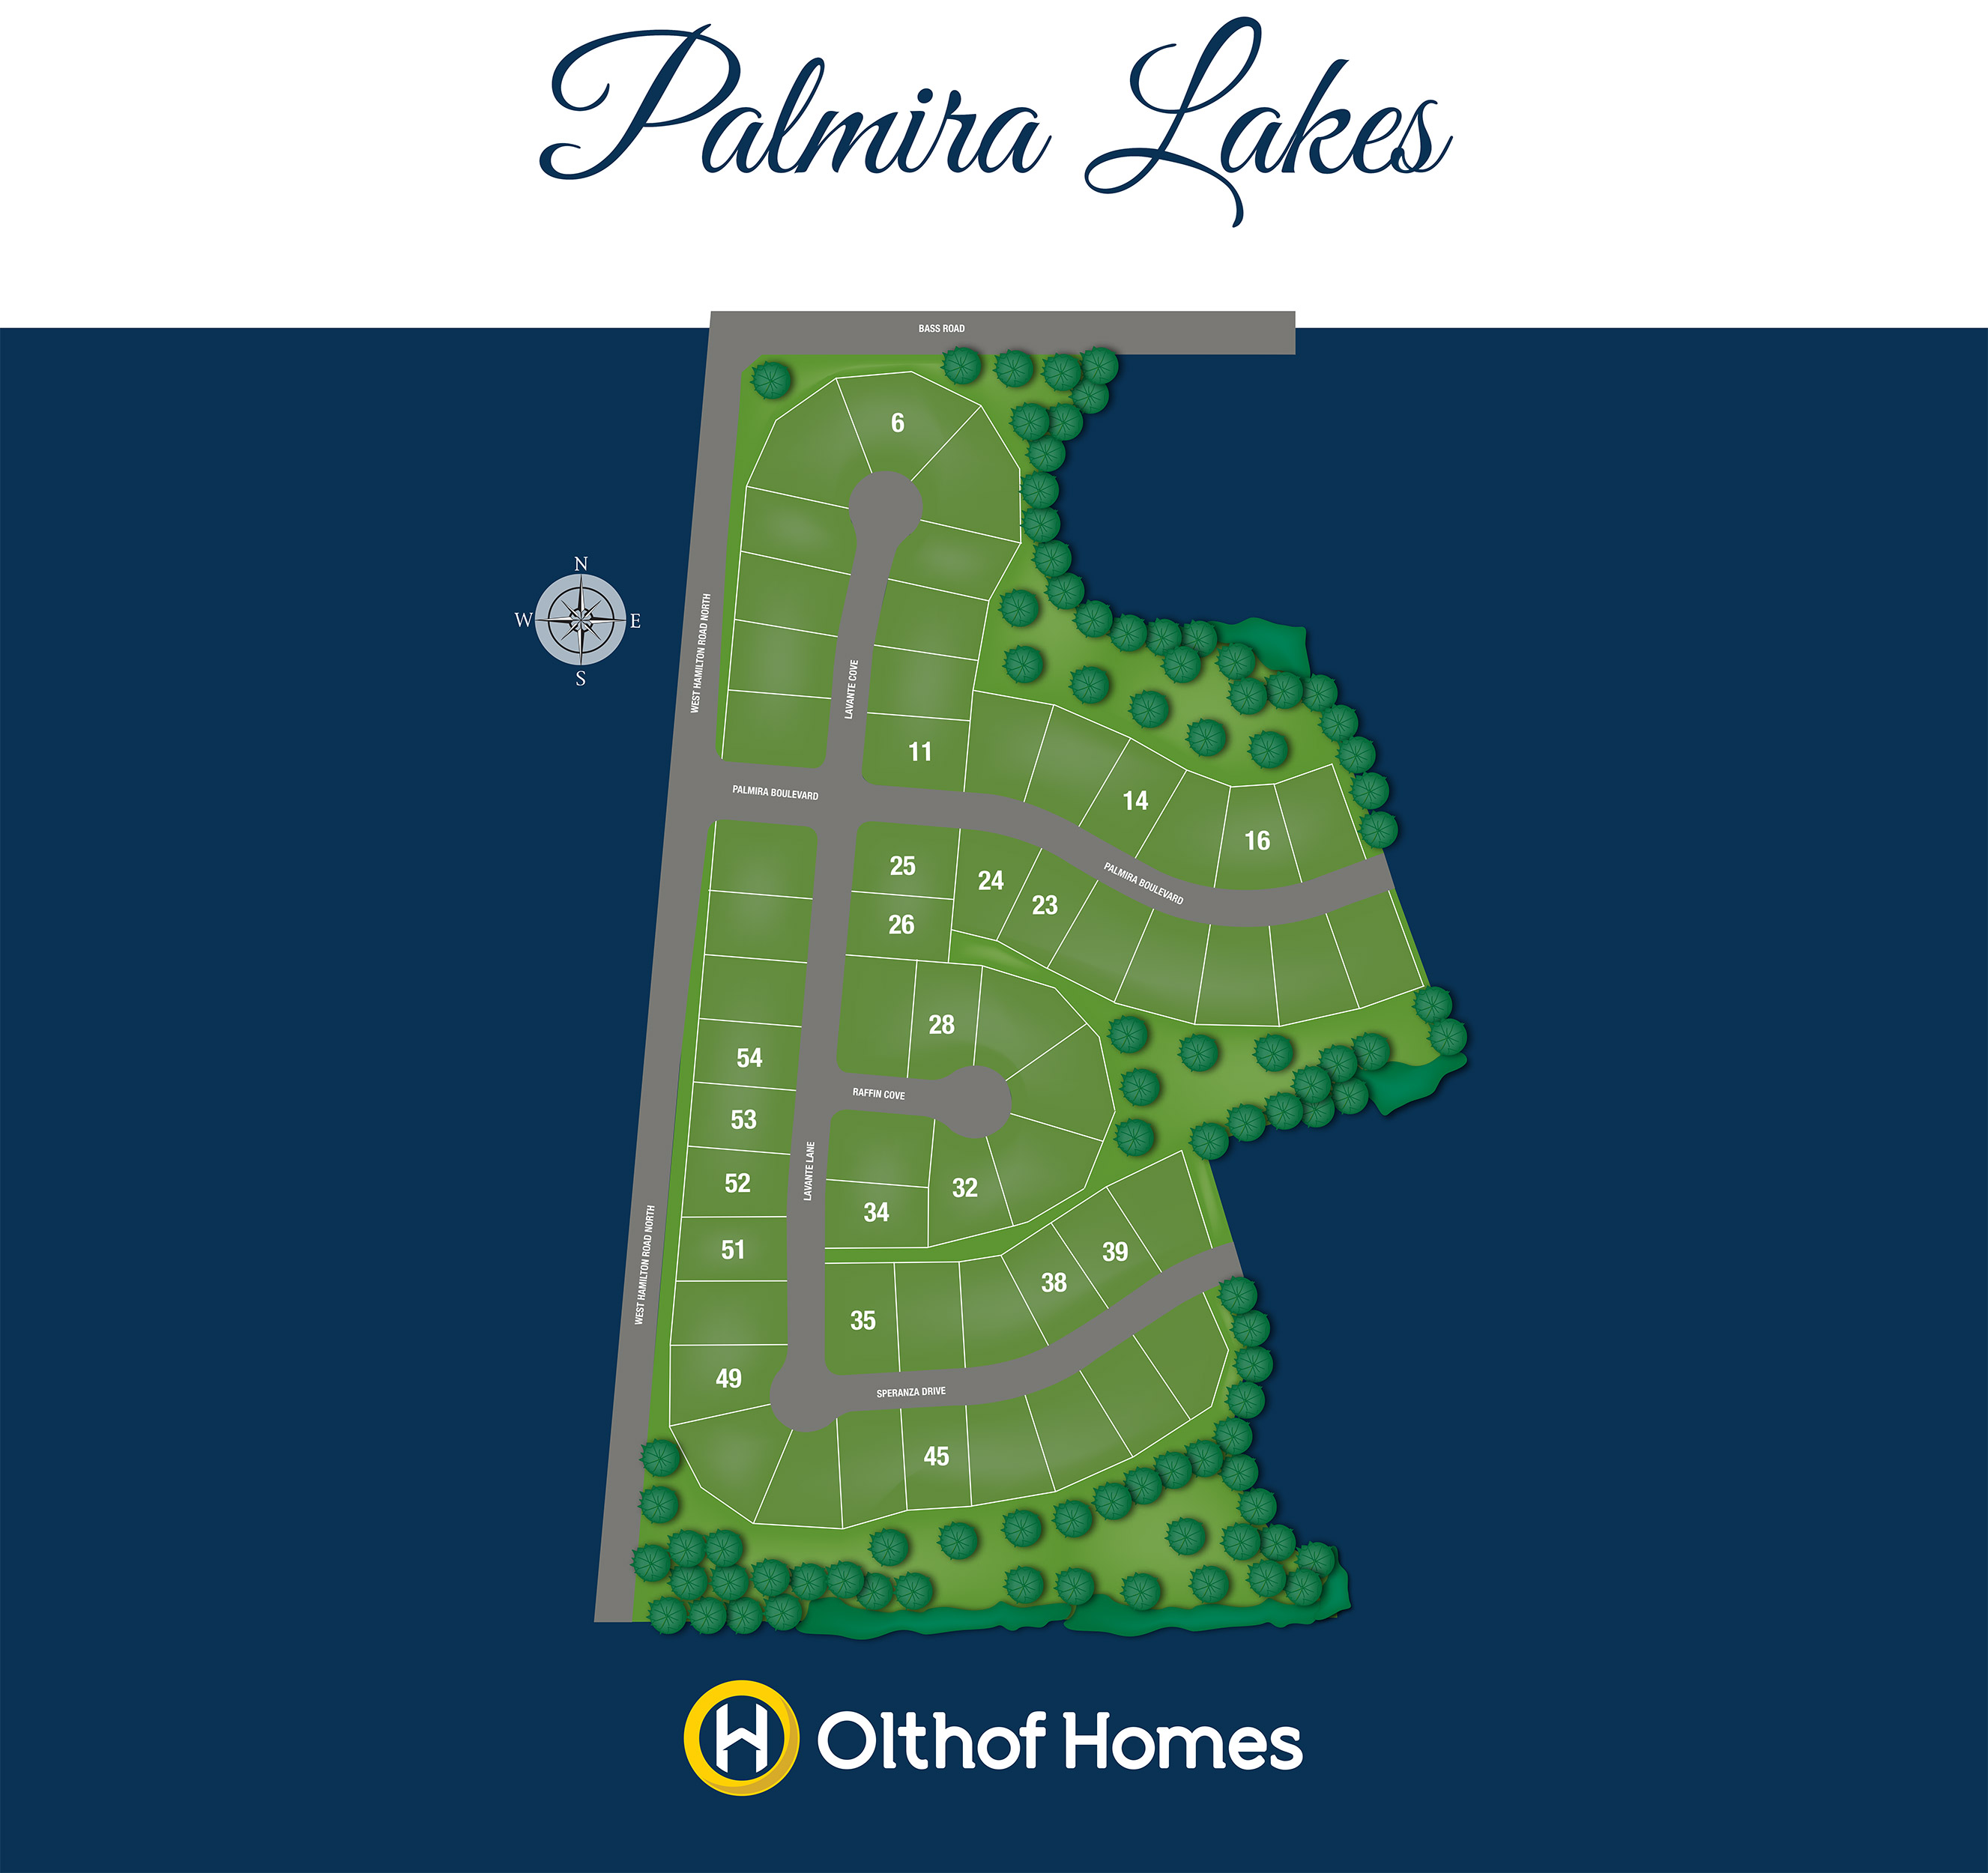 VIA Marketing Plat & Site Illustration Olthof Homes Subdivision Community Palmira Lakes